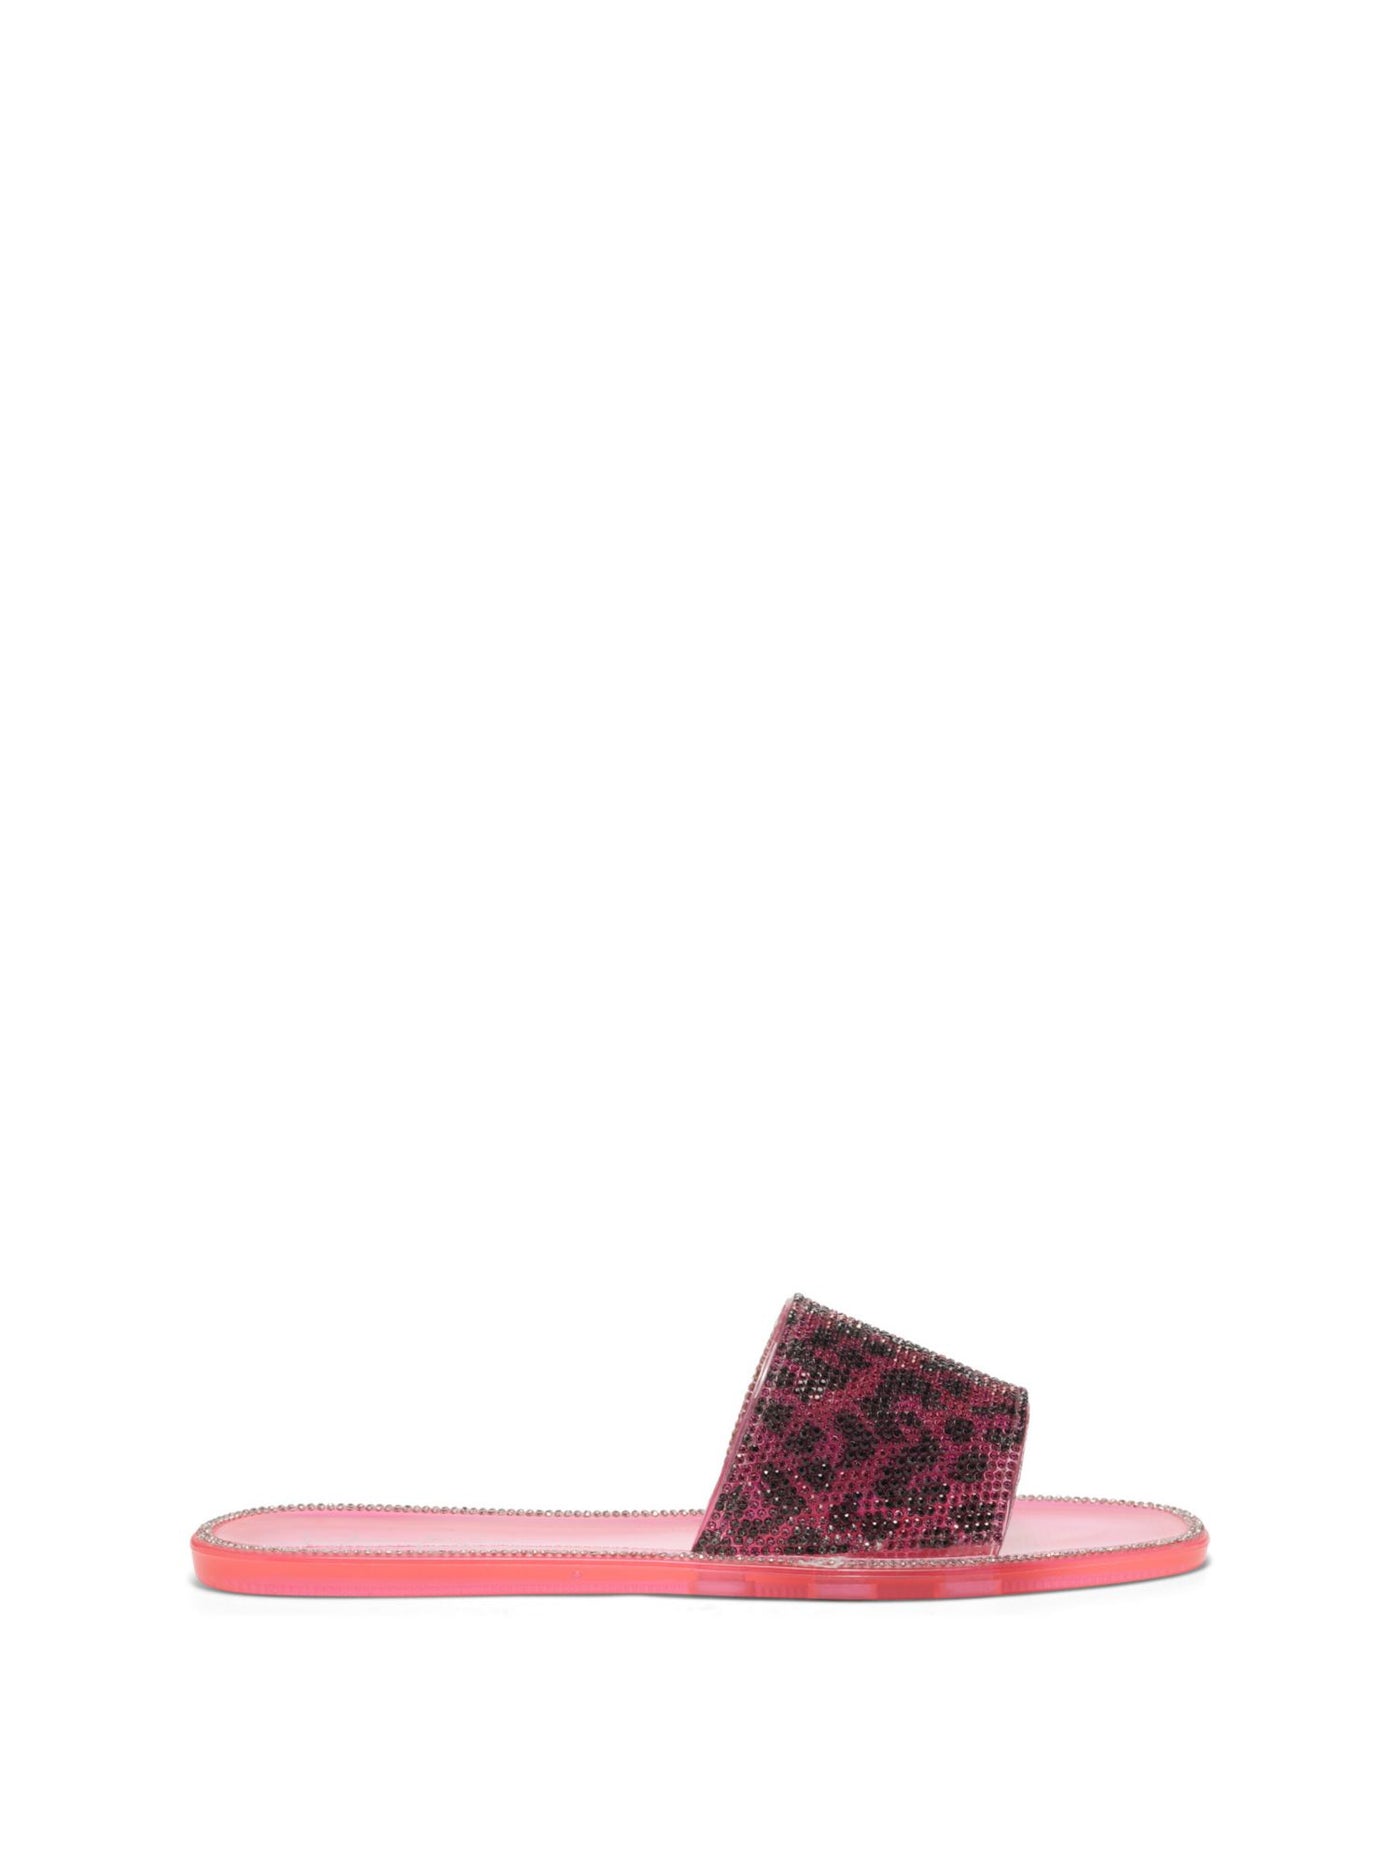 JESSICA SIMPSON Womens Pink Cheetah Jelly Rhinestone Kassime Square Toe Slip On Slide Sandals Shoes 10 M